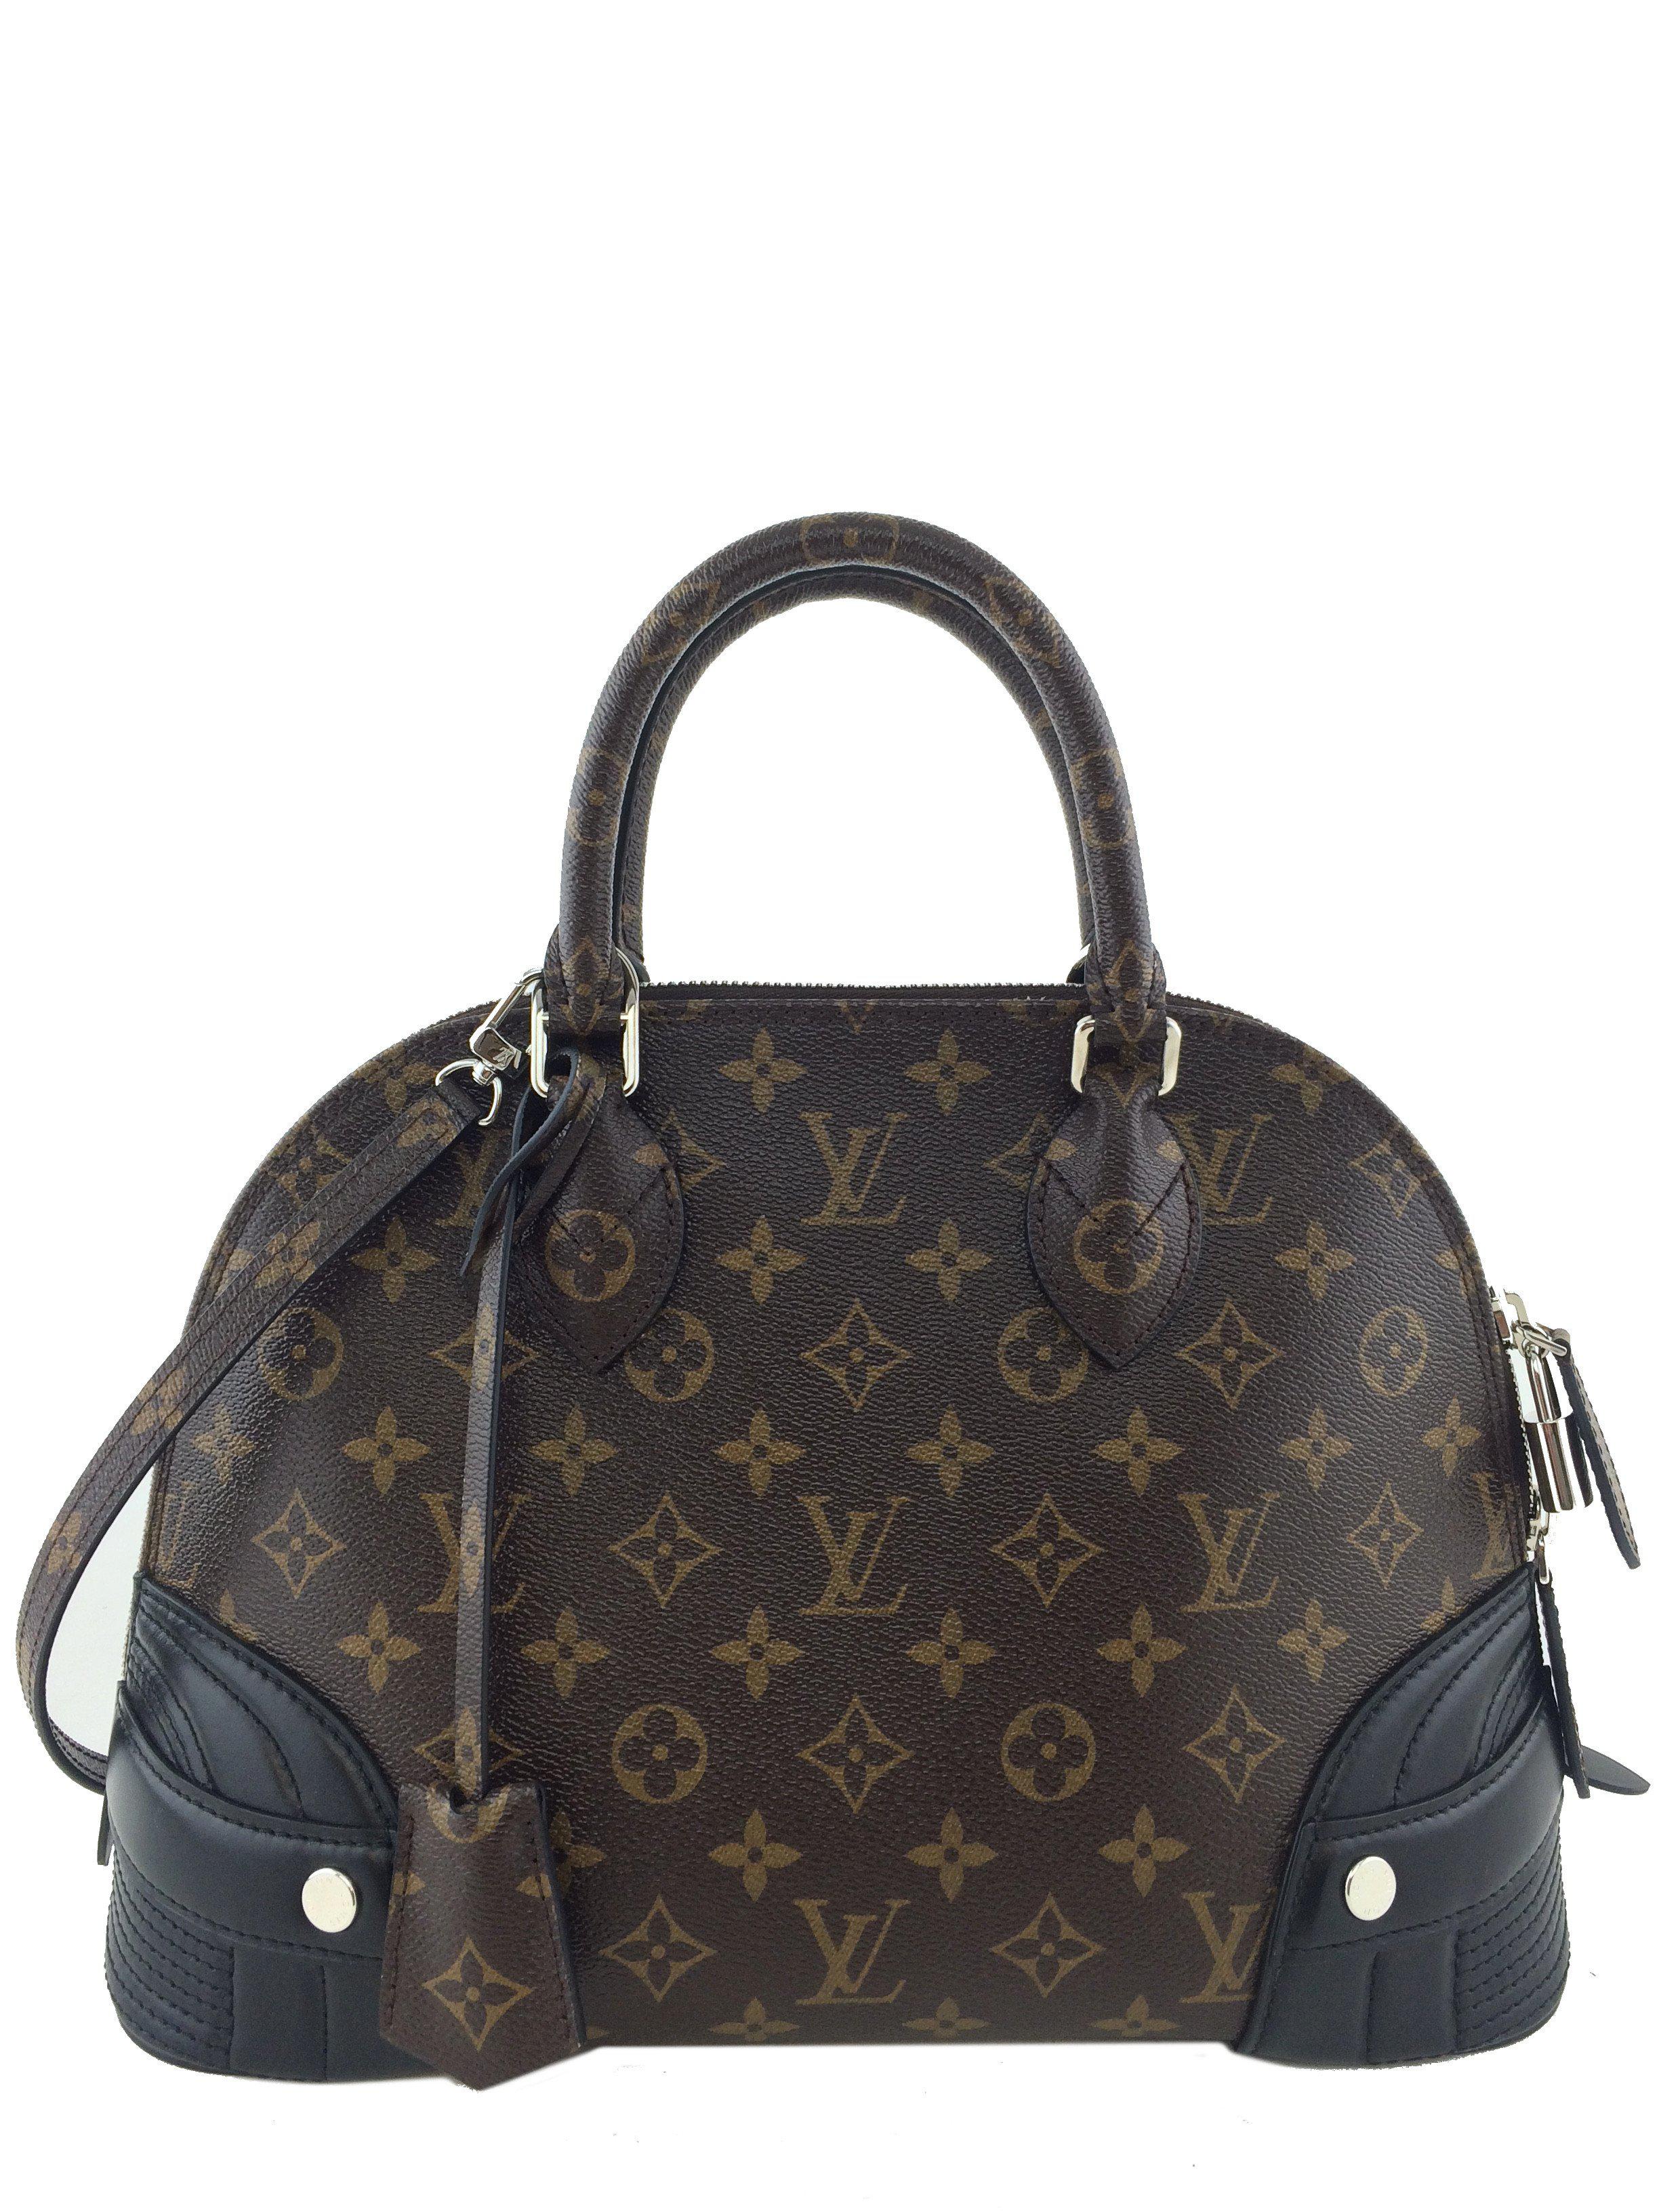 Limited Edition Louis Vuitton Leather Handbag Luxury Brand Kin